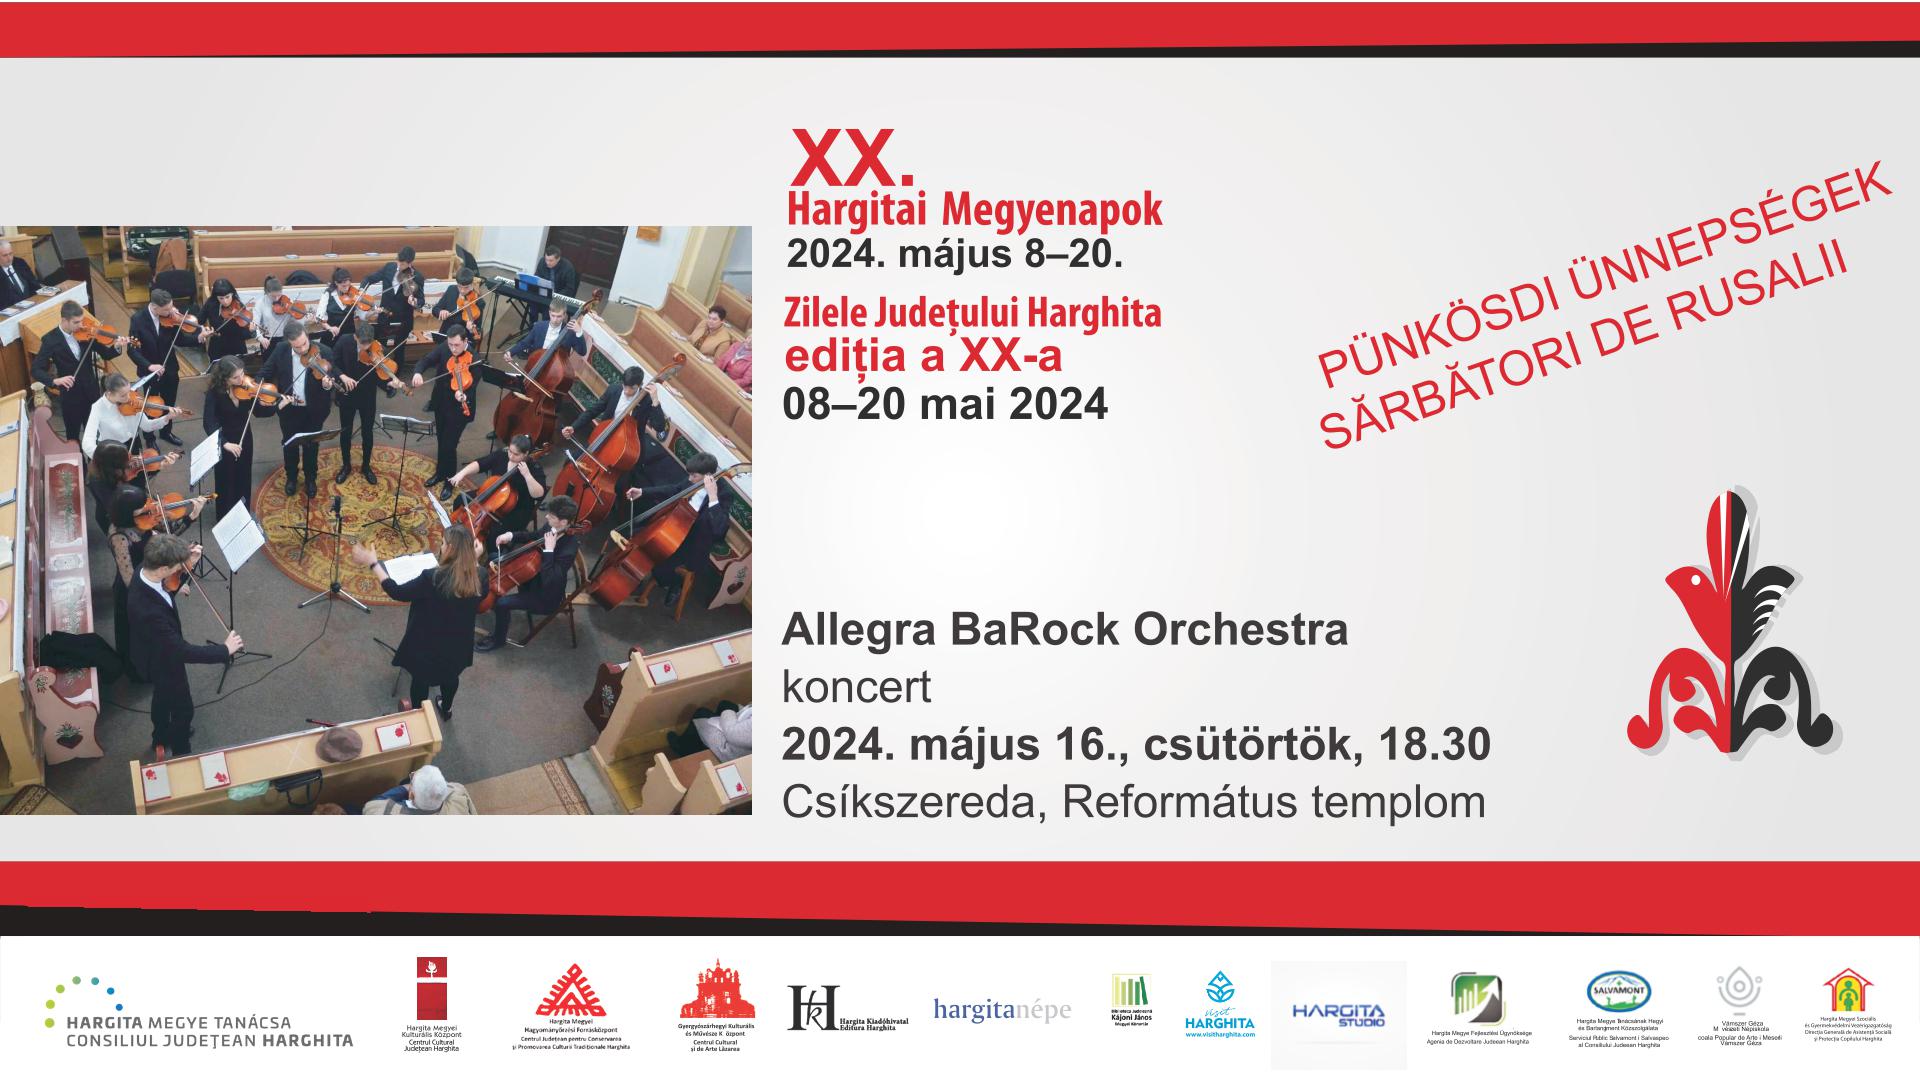 Allegra BaRock Orchestra concert